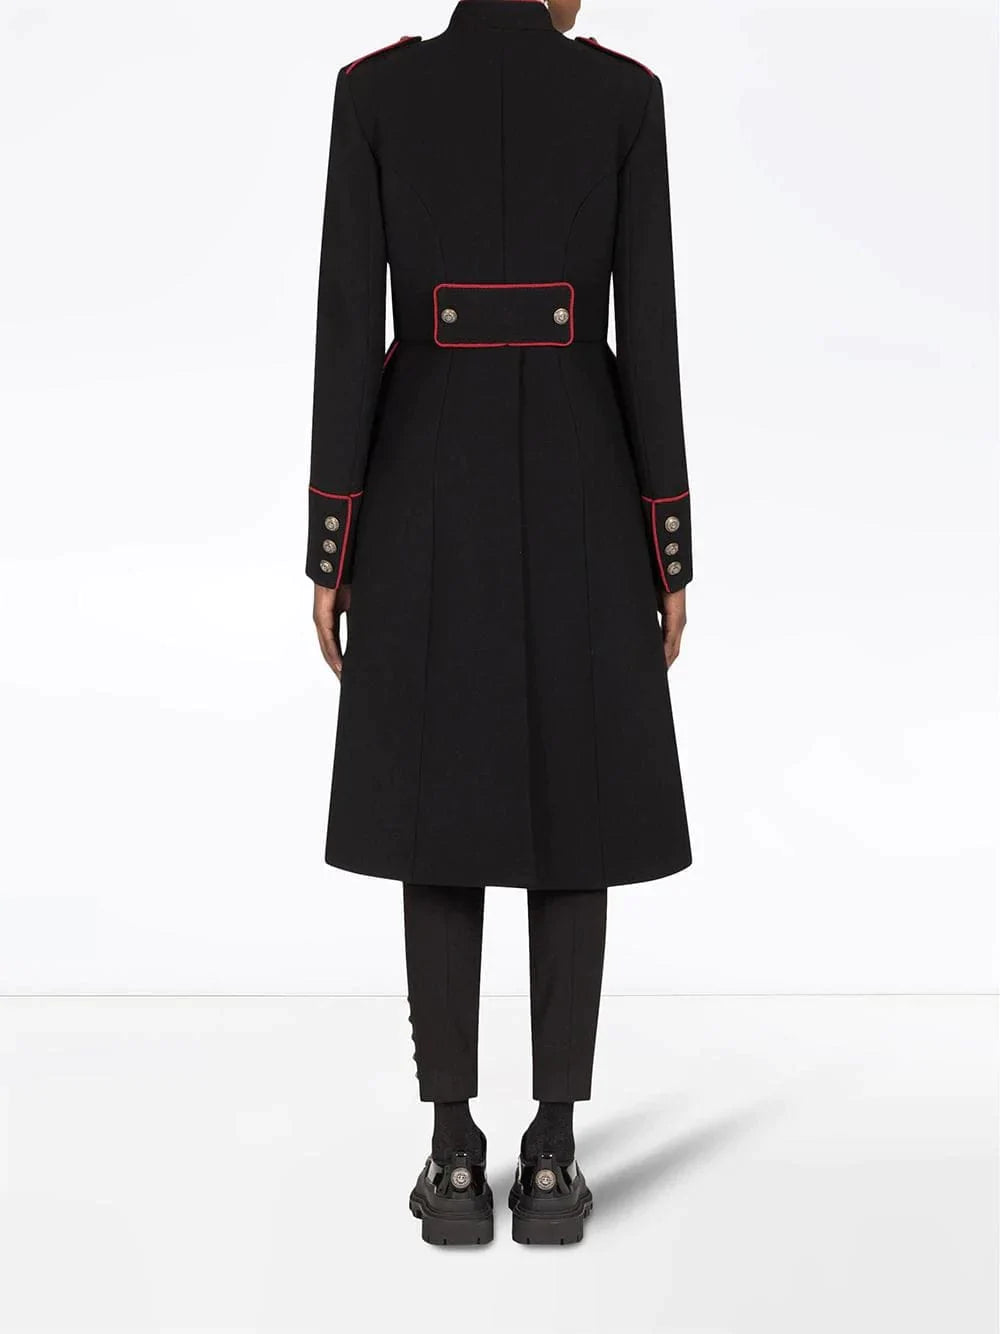 Dolce & Gabbana Contrast-Piping Woollen Jacket